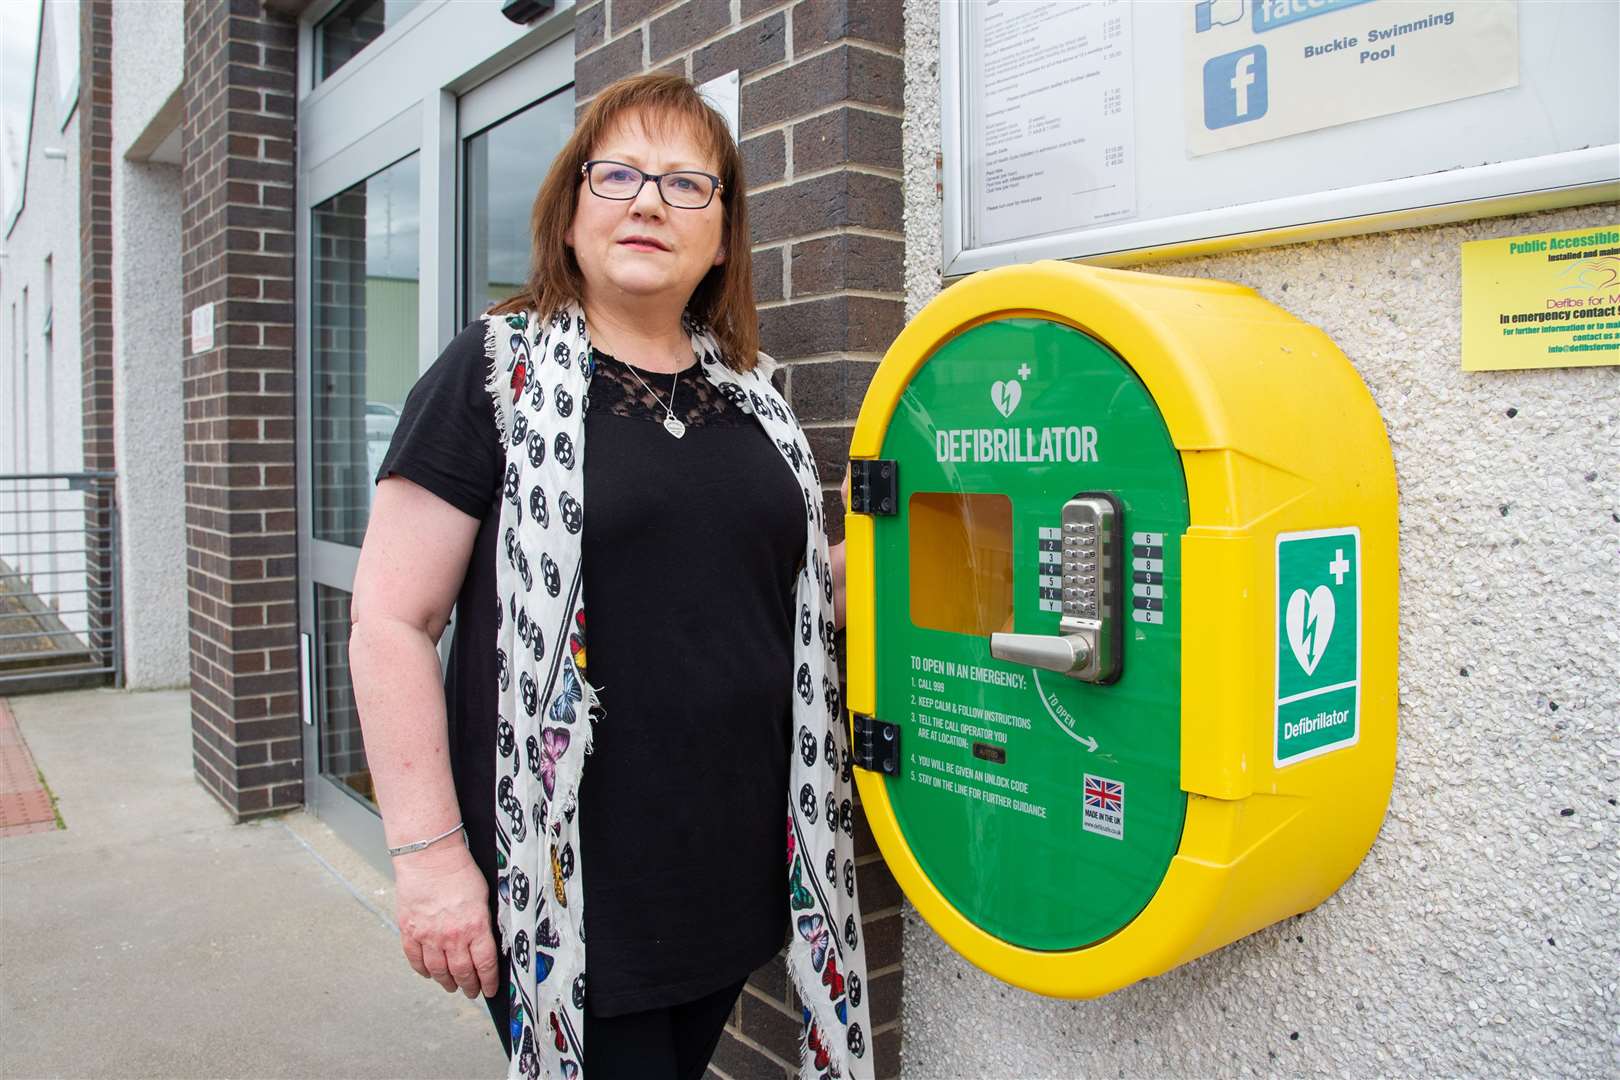 Councillor Sonya Warren: Registering public access defibrillators could "save lives". Picture: Daniel Forsyth